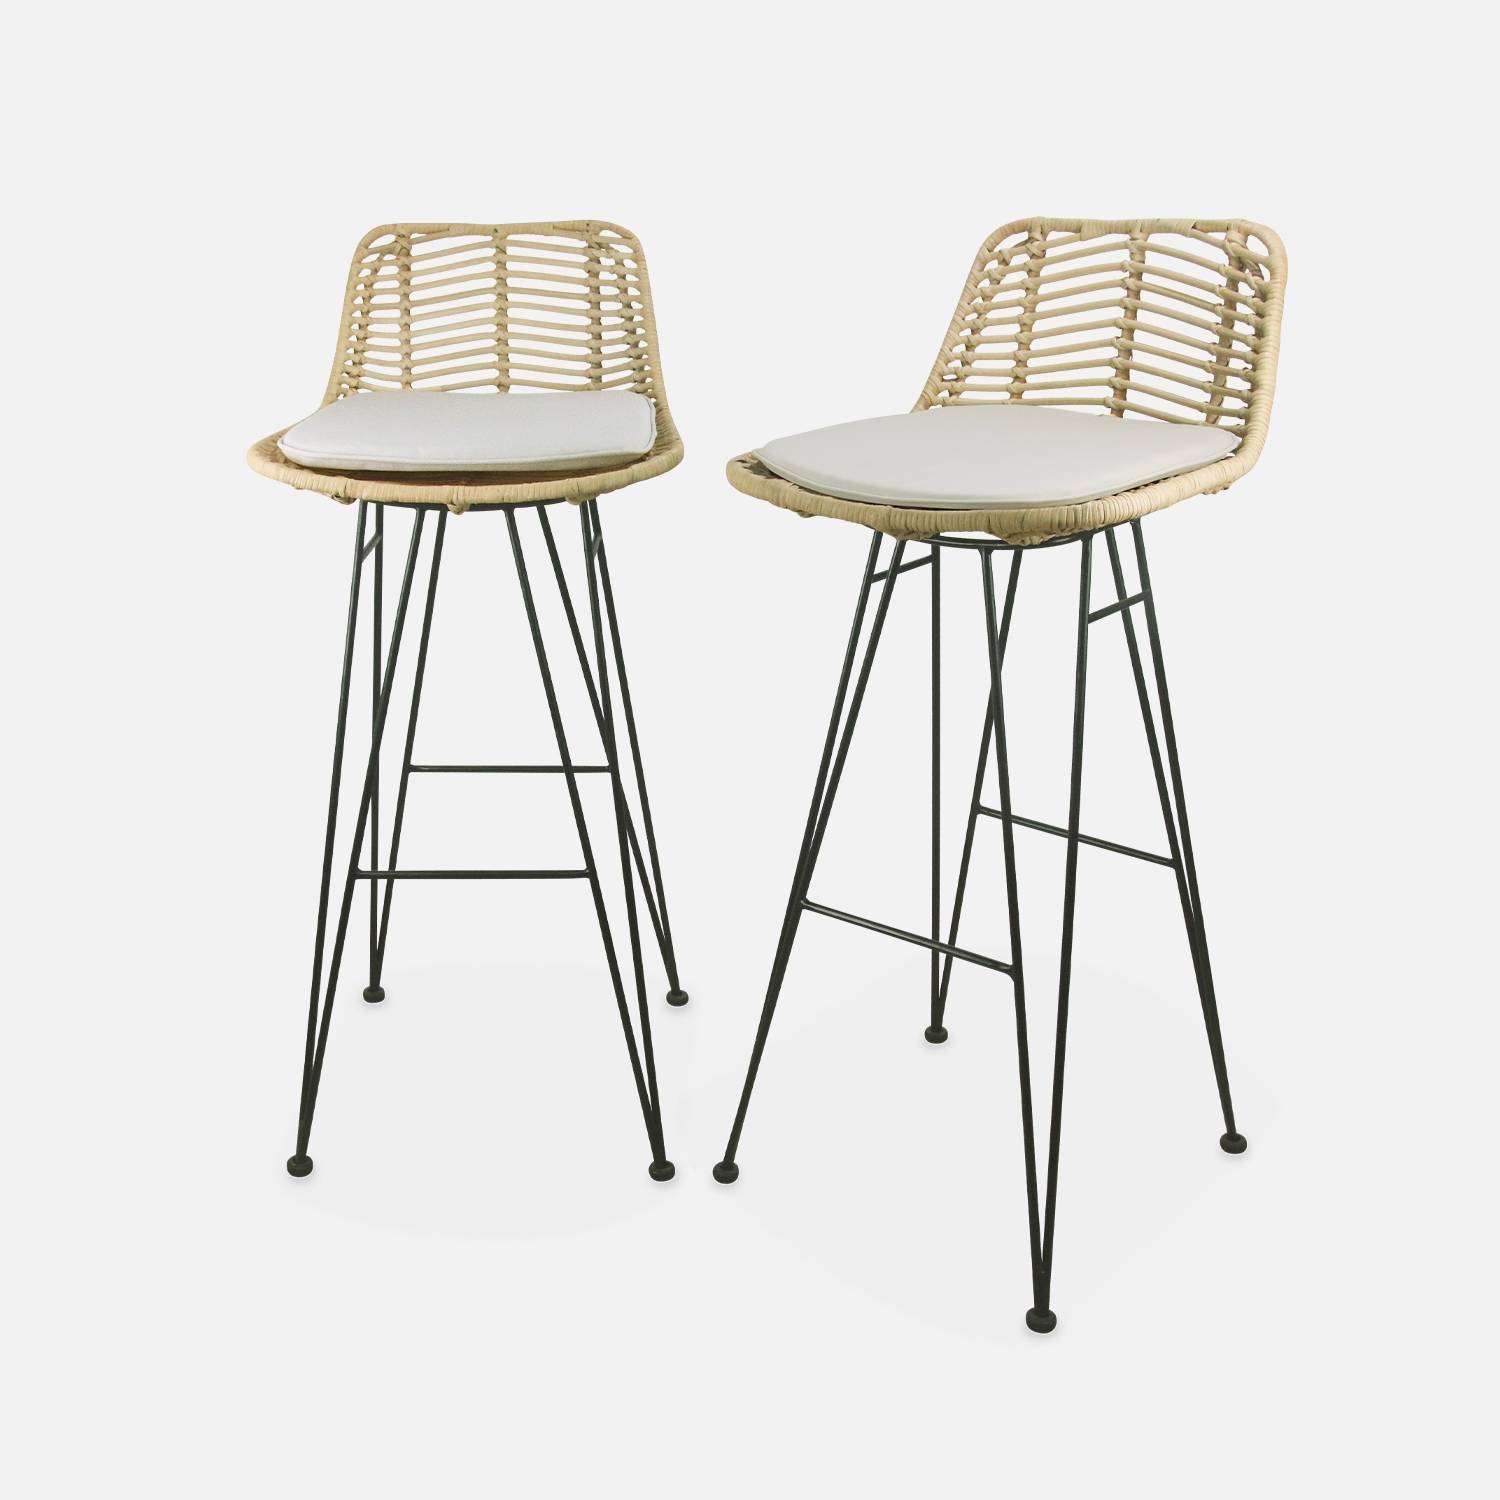 Pair of rattan bar stools, natural